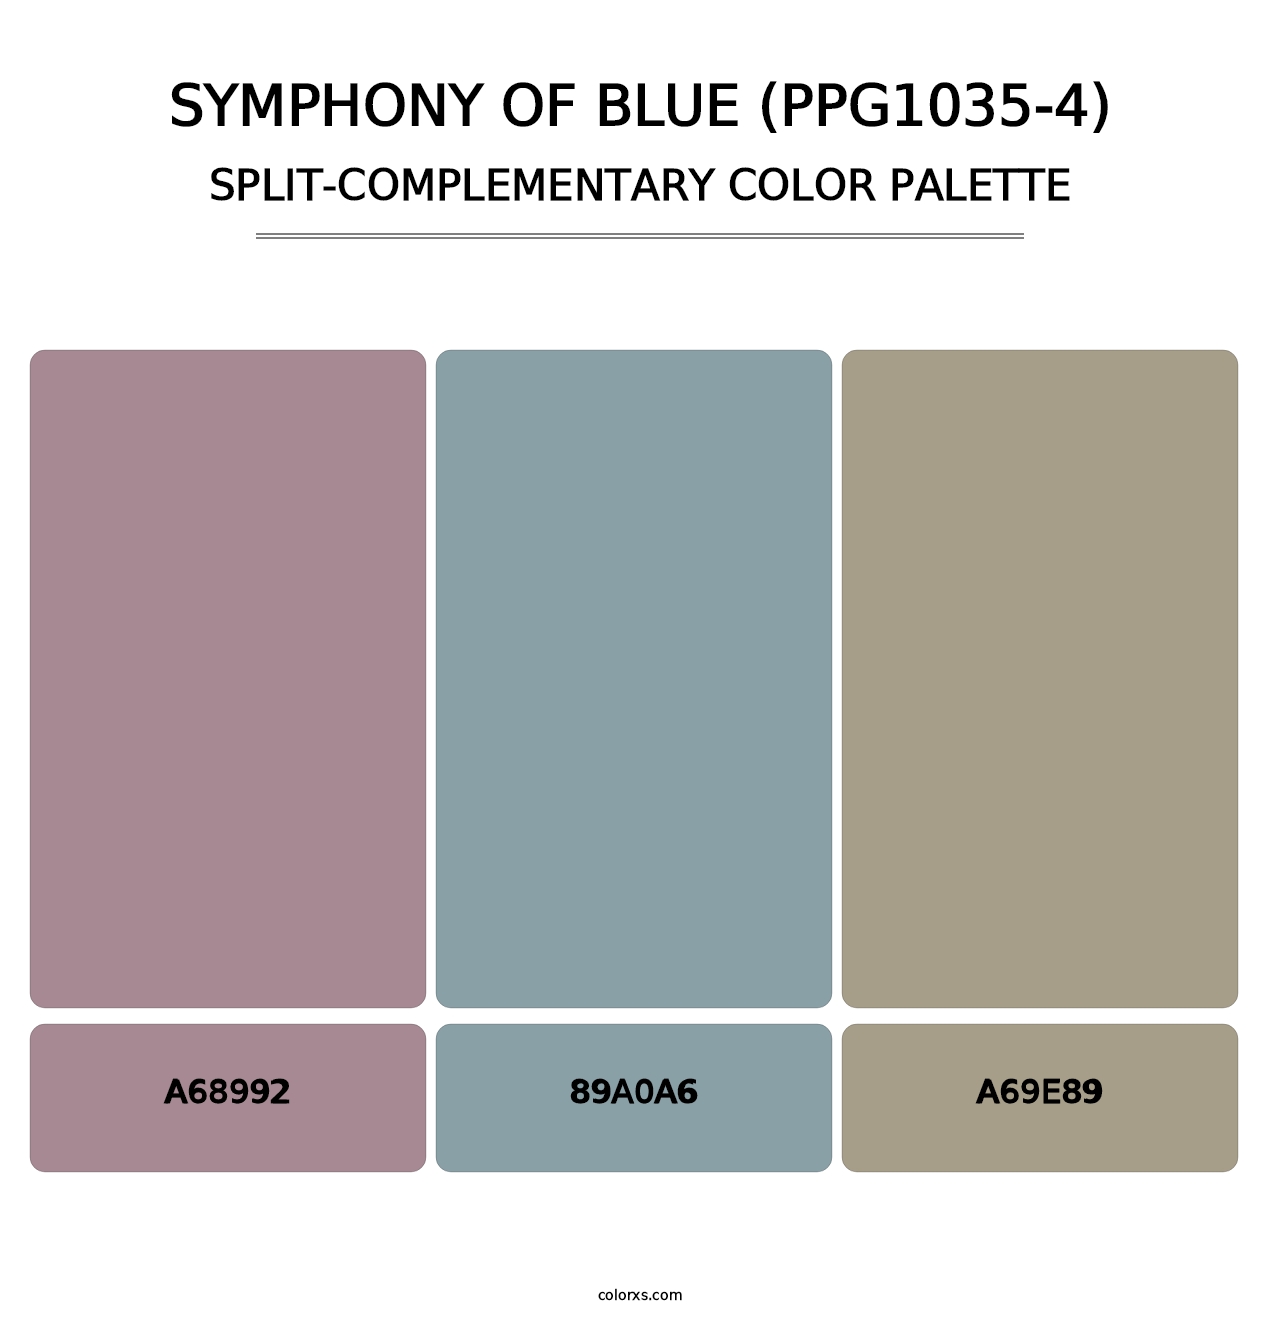 Symphony Of Blue (PPG1035-4) - Split-Complementary Color Palette